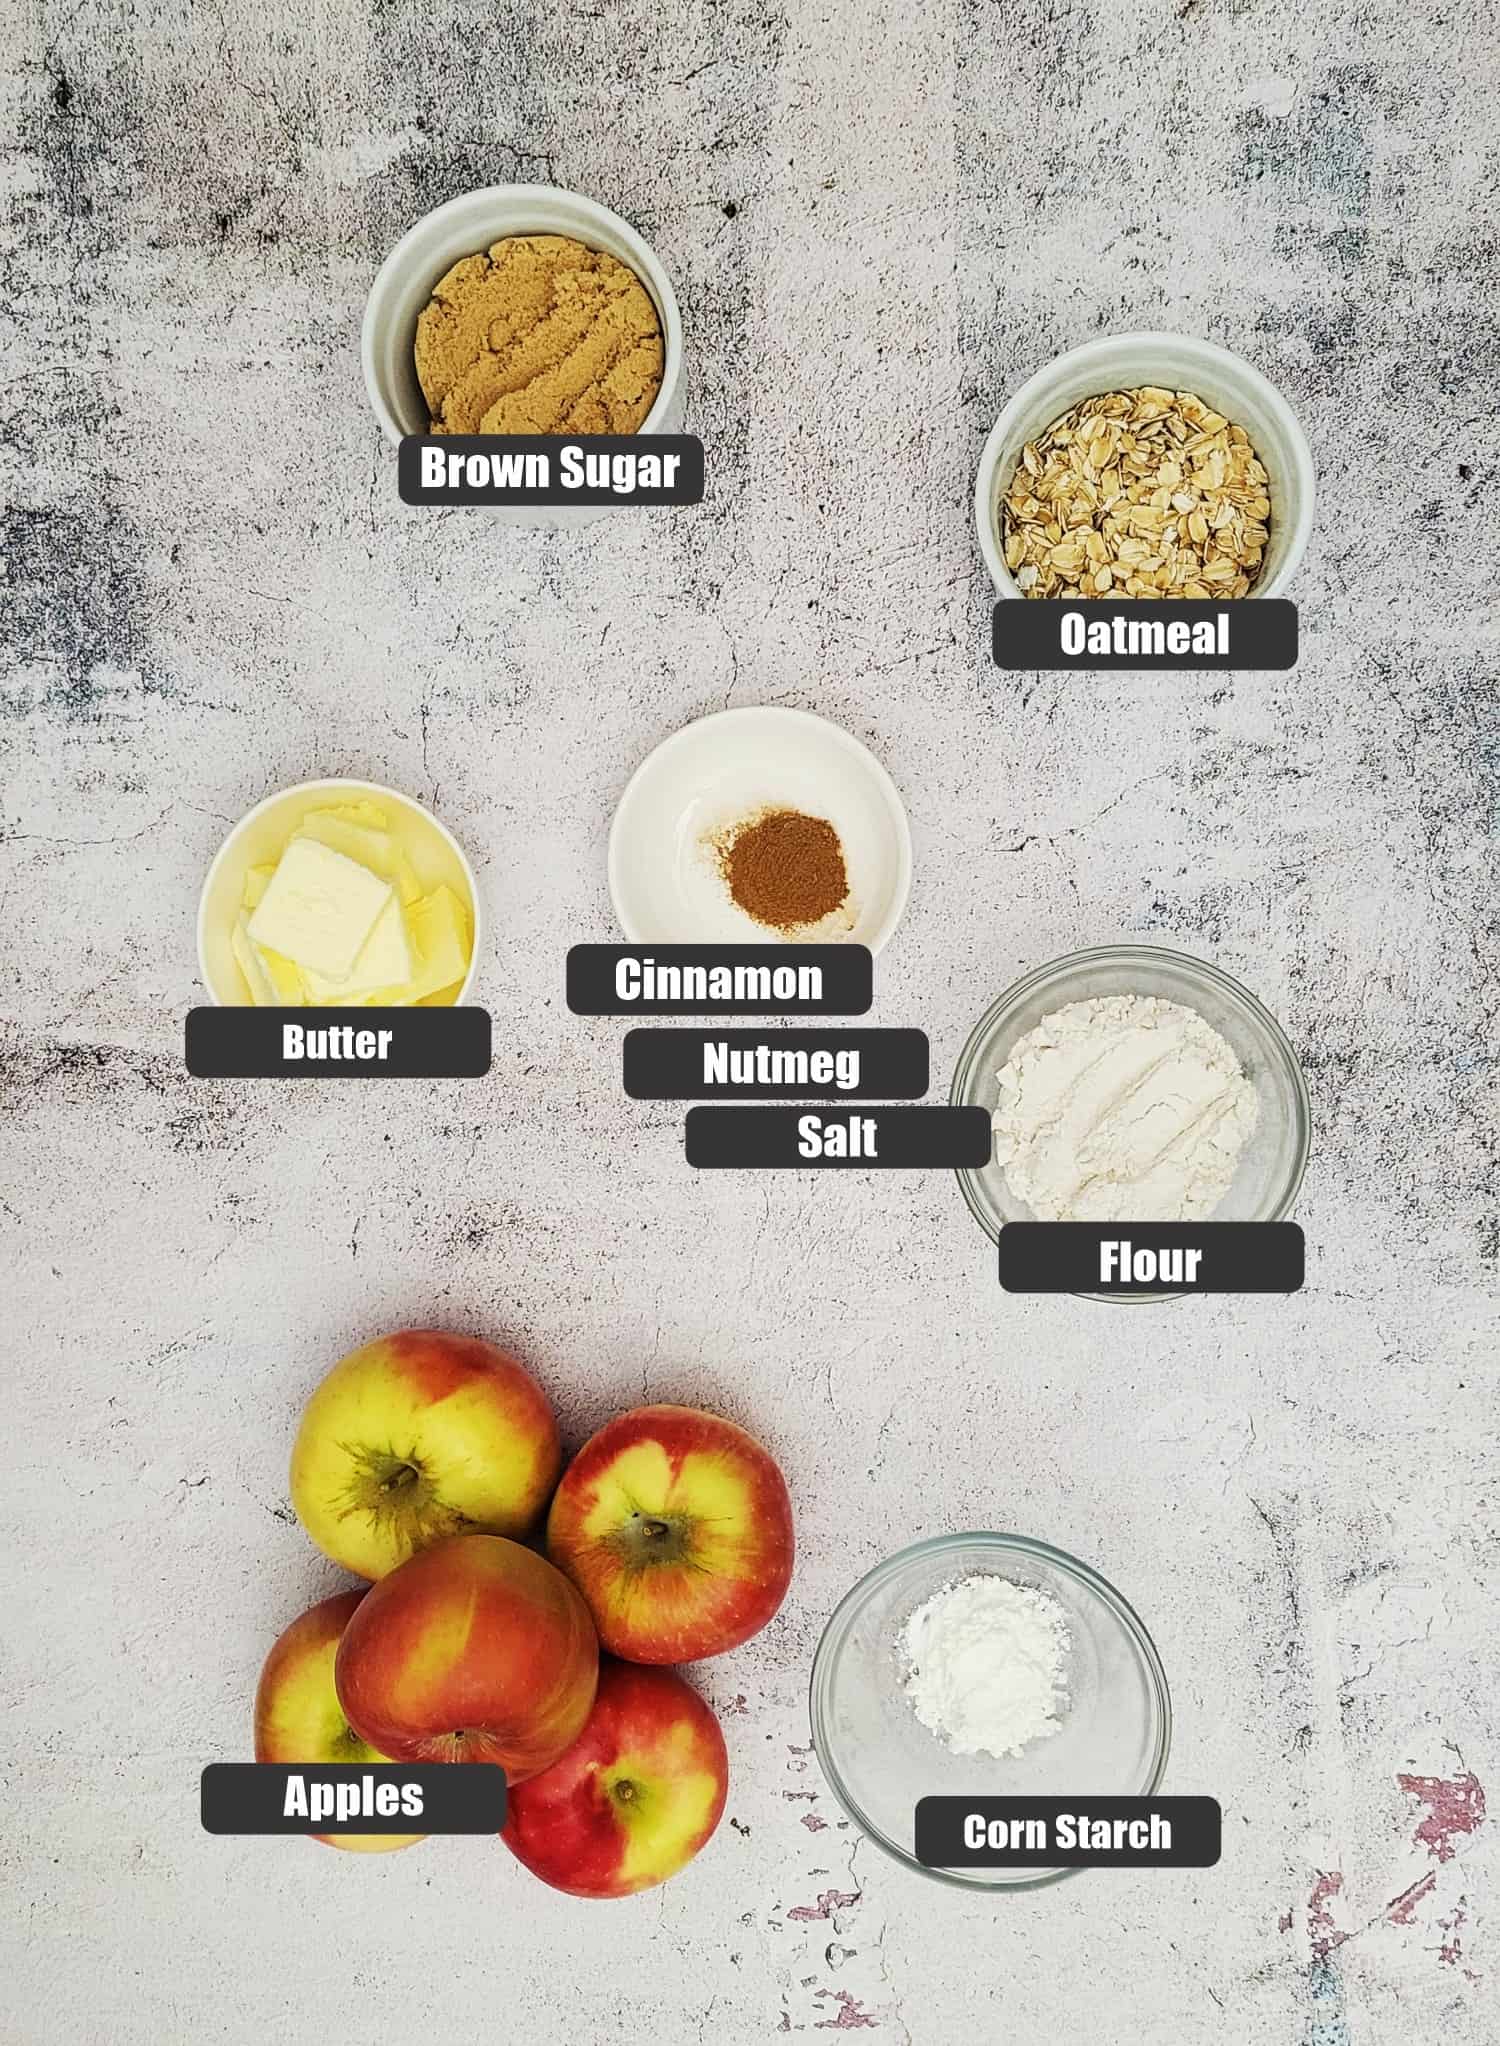 ingredients needed to make apple crisp including apples, corn starch, brown sugar, cinnamon, nutmeg, salt, oatmeal, butter and flour